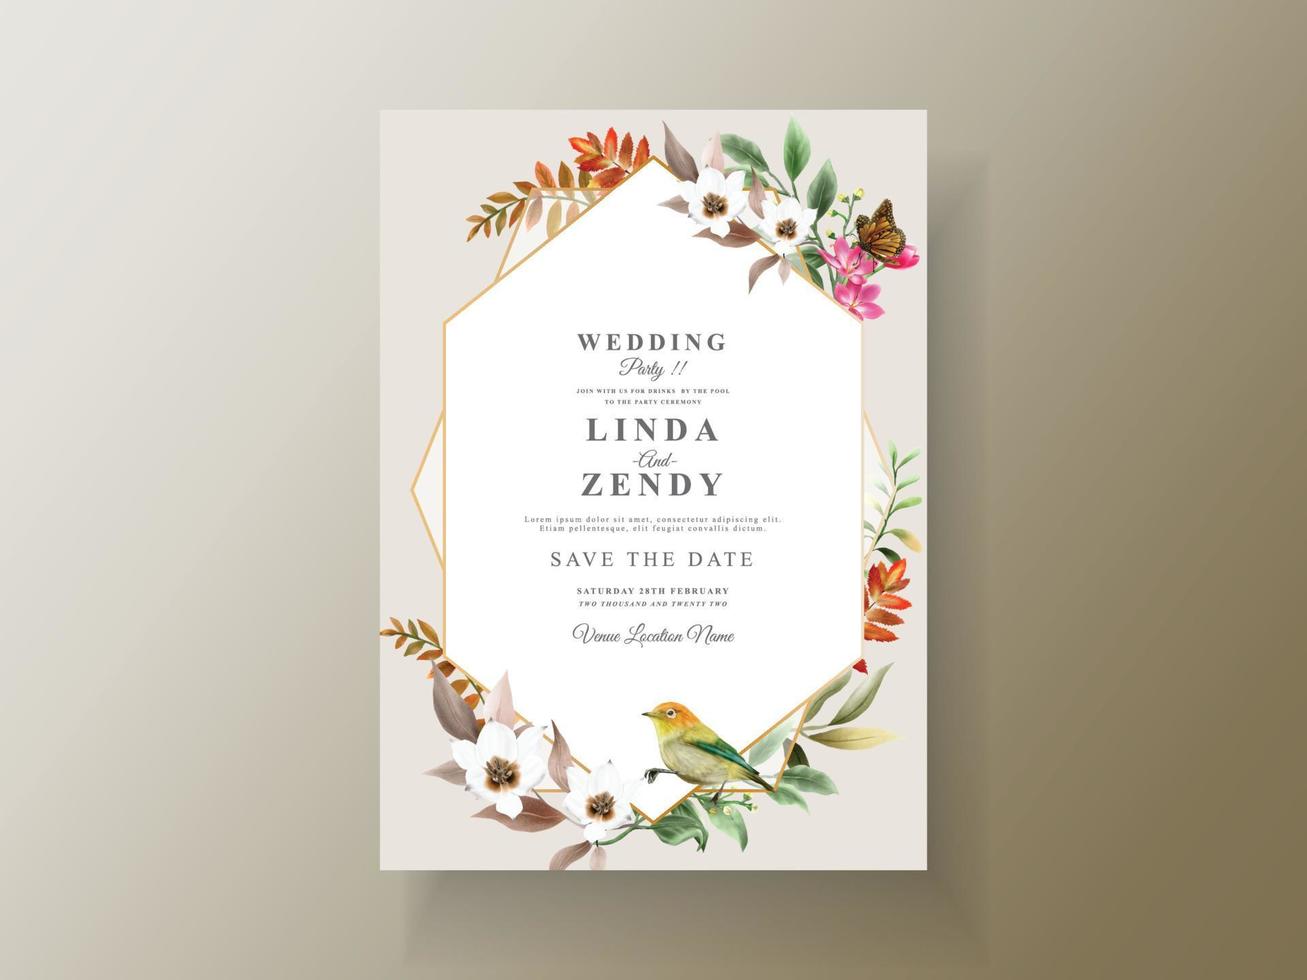 Wedding invitation card forest life vector